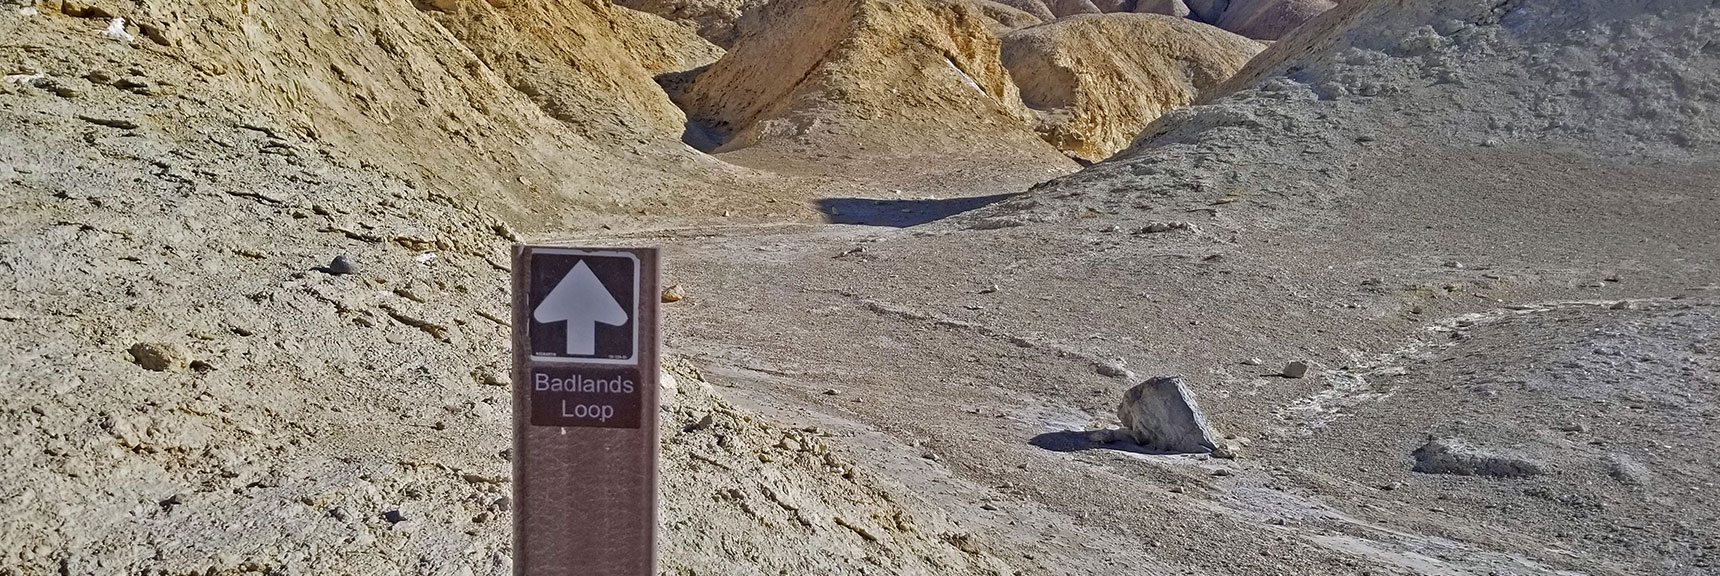 Now We're on the Badlands Loop Heading Toward Zabriskie Point. | Golden Canyon to Zabriskie Point | Death Valley National Park, California